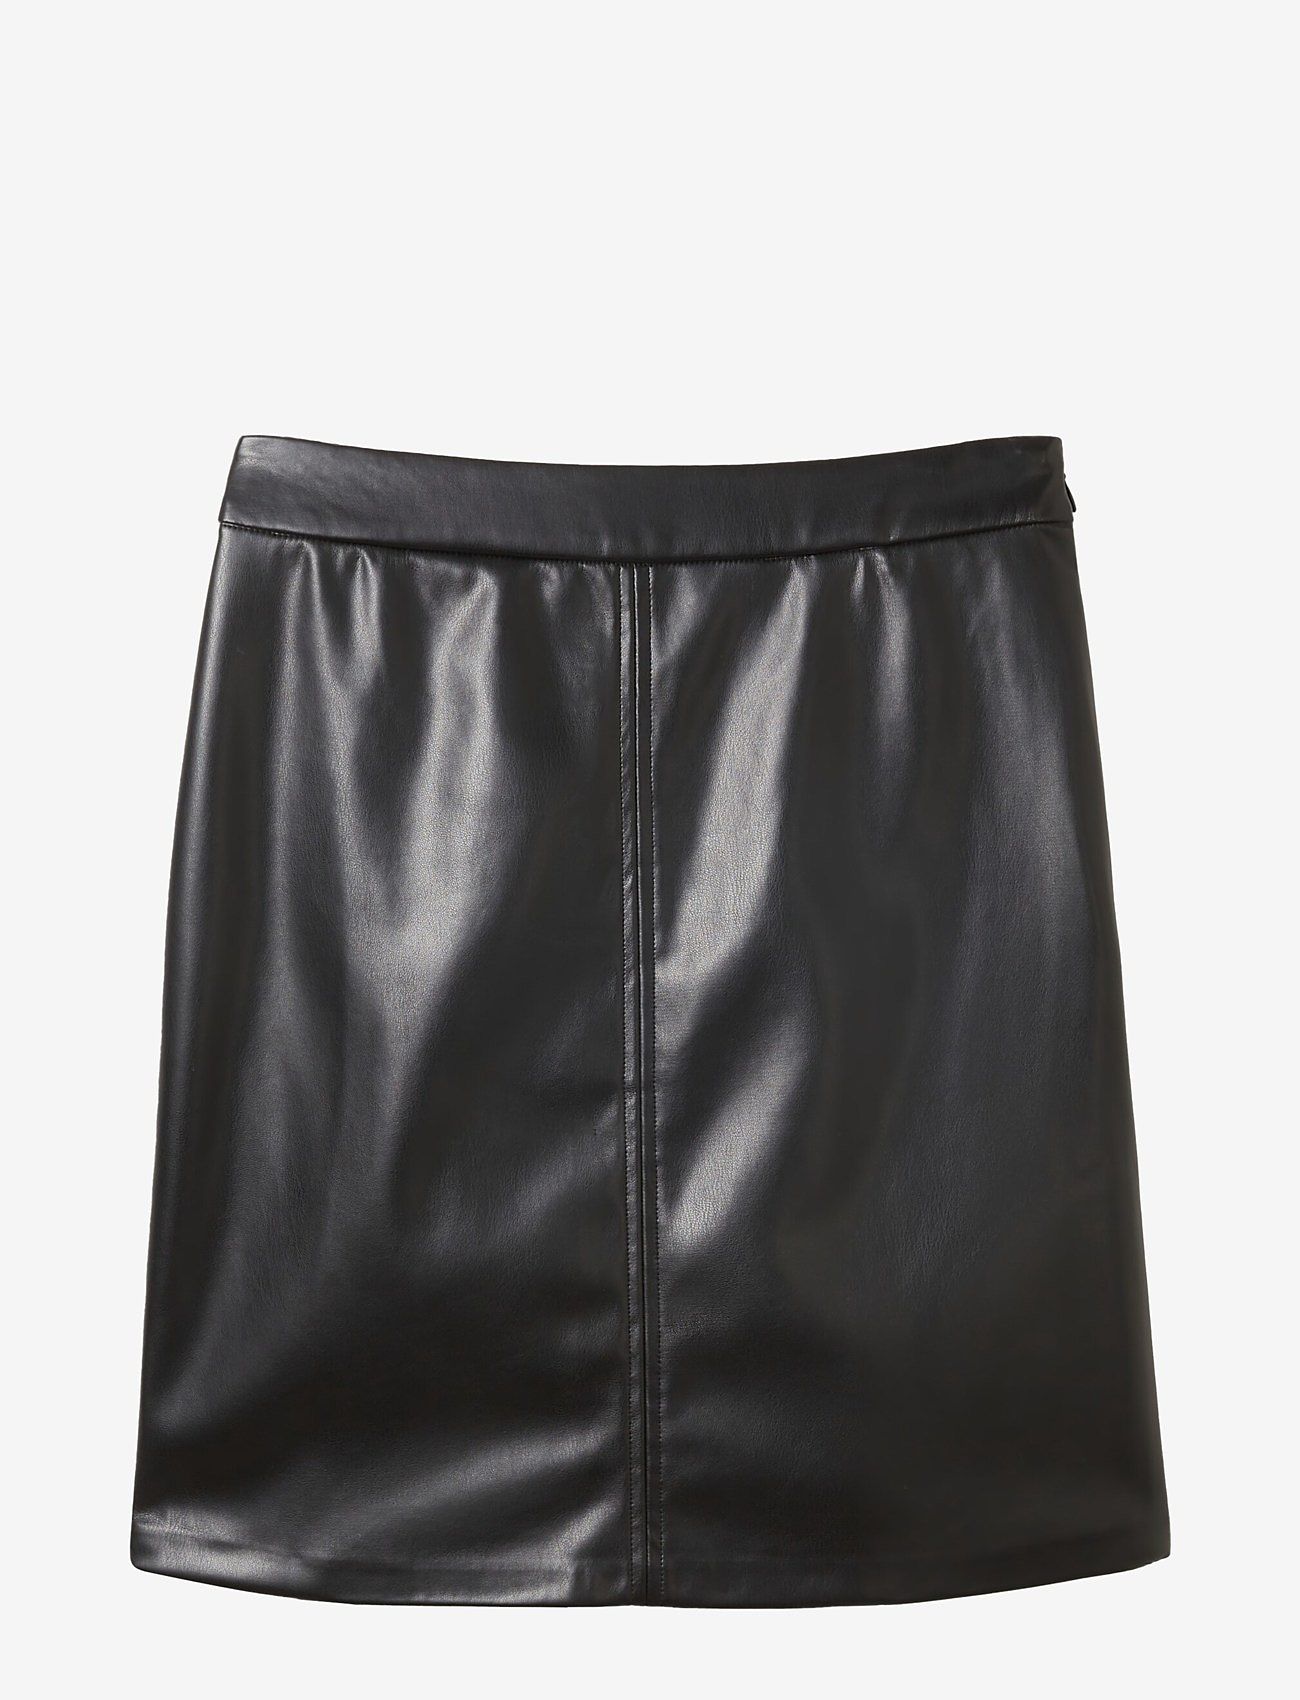 Tom Tailor - skirt fake leather - korte nederdele - deep black - 0